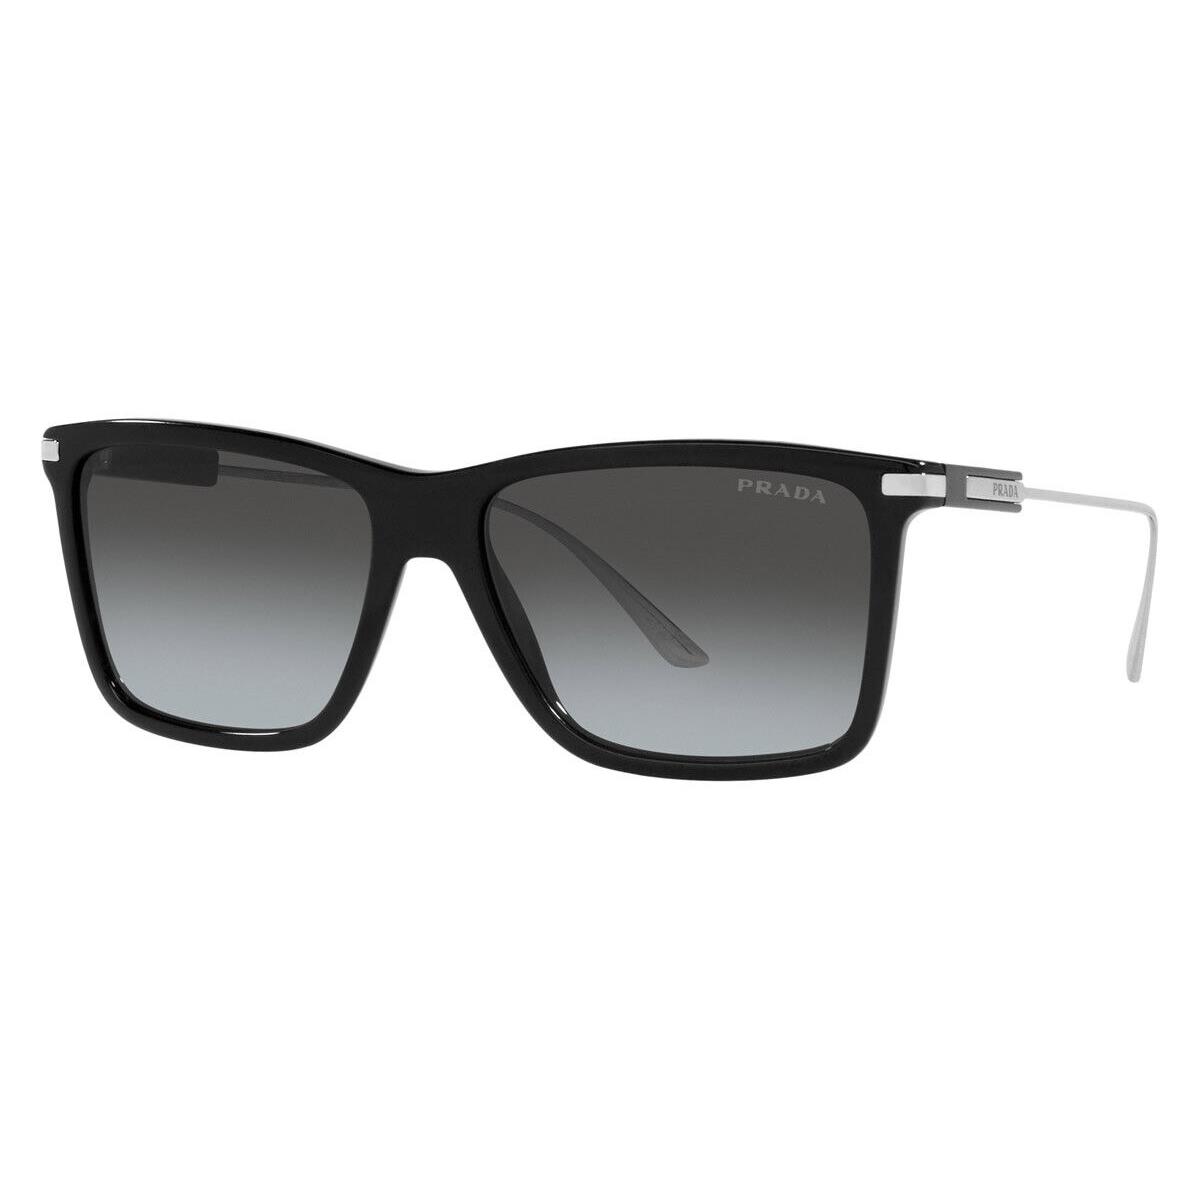 Prada PR 01ZS Sunglasses Black Gradient Gray Vintage 58mm